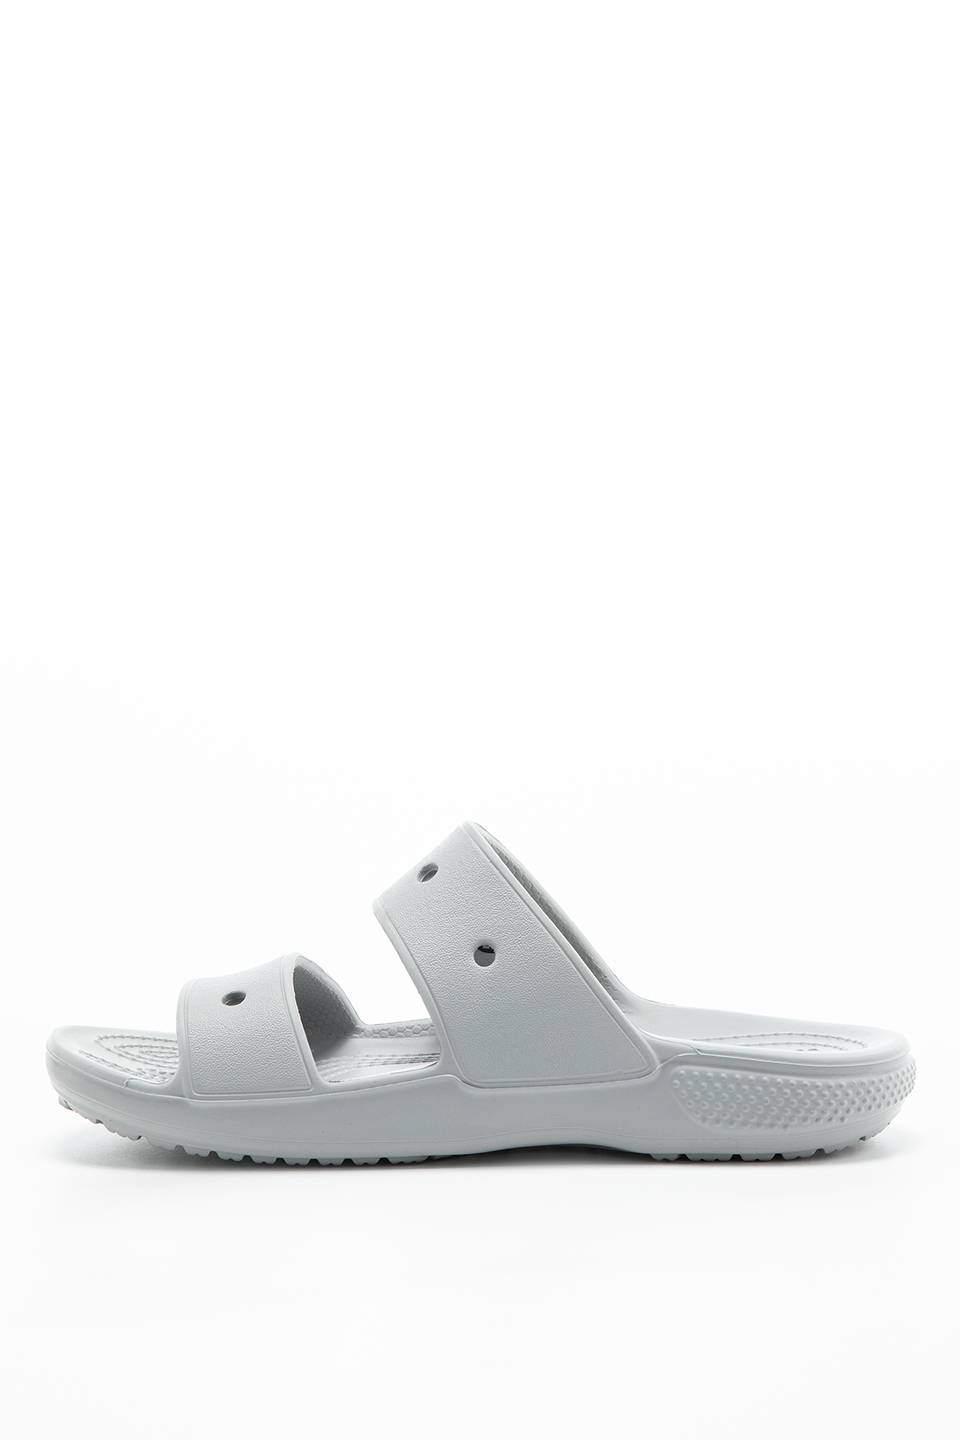 Klapki Crocs Classic Sandal Lgr 206761-007